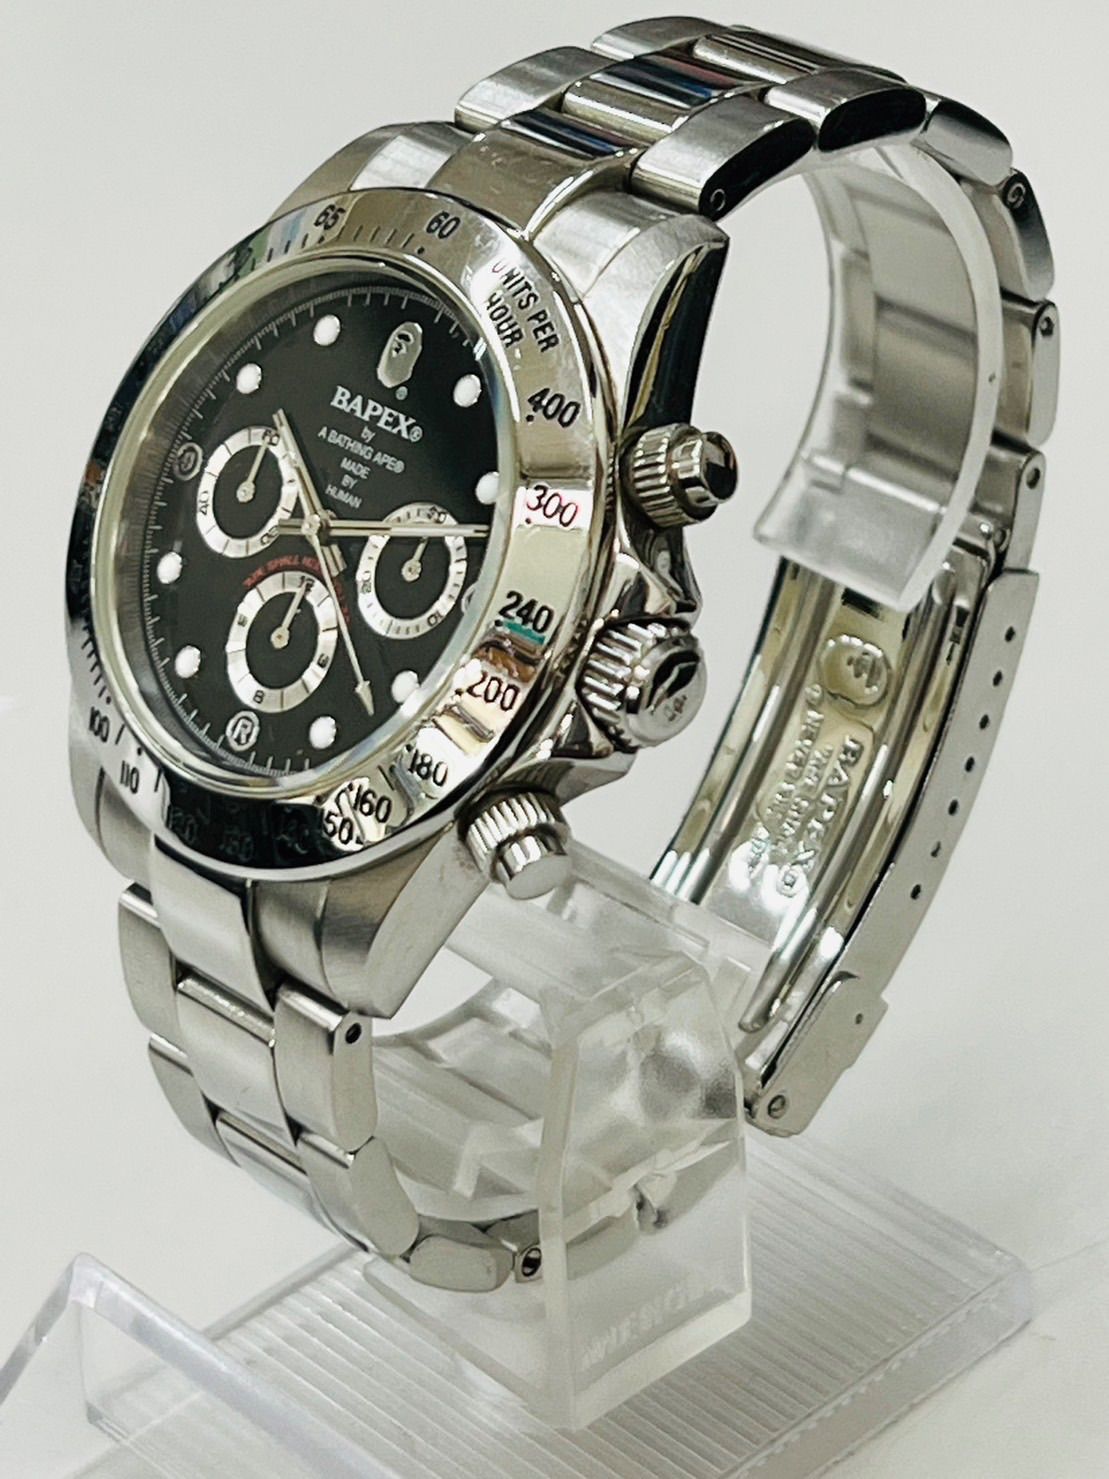 BAPEX Daytona ベイプ デイトナ 初期モデル 自動巻き 腕時計 - 腕時計